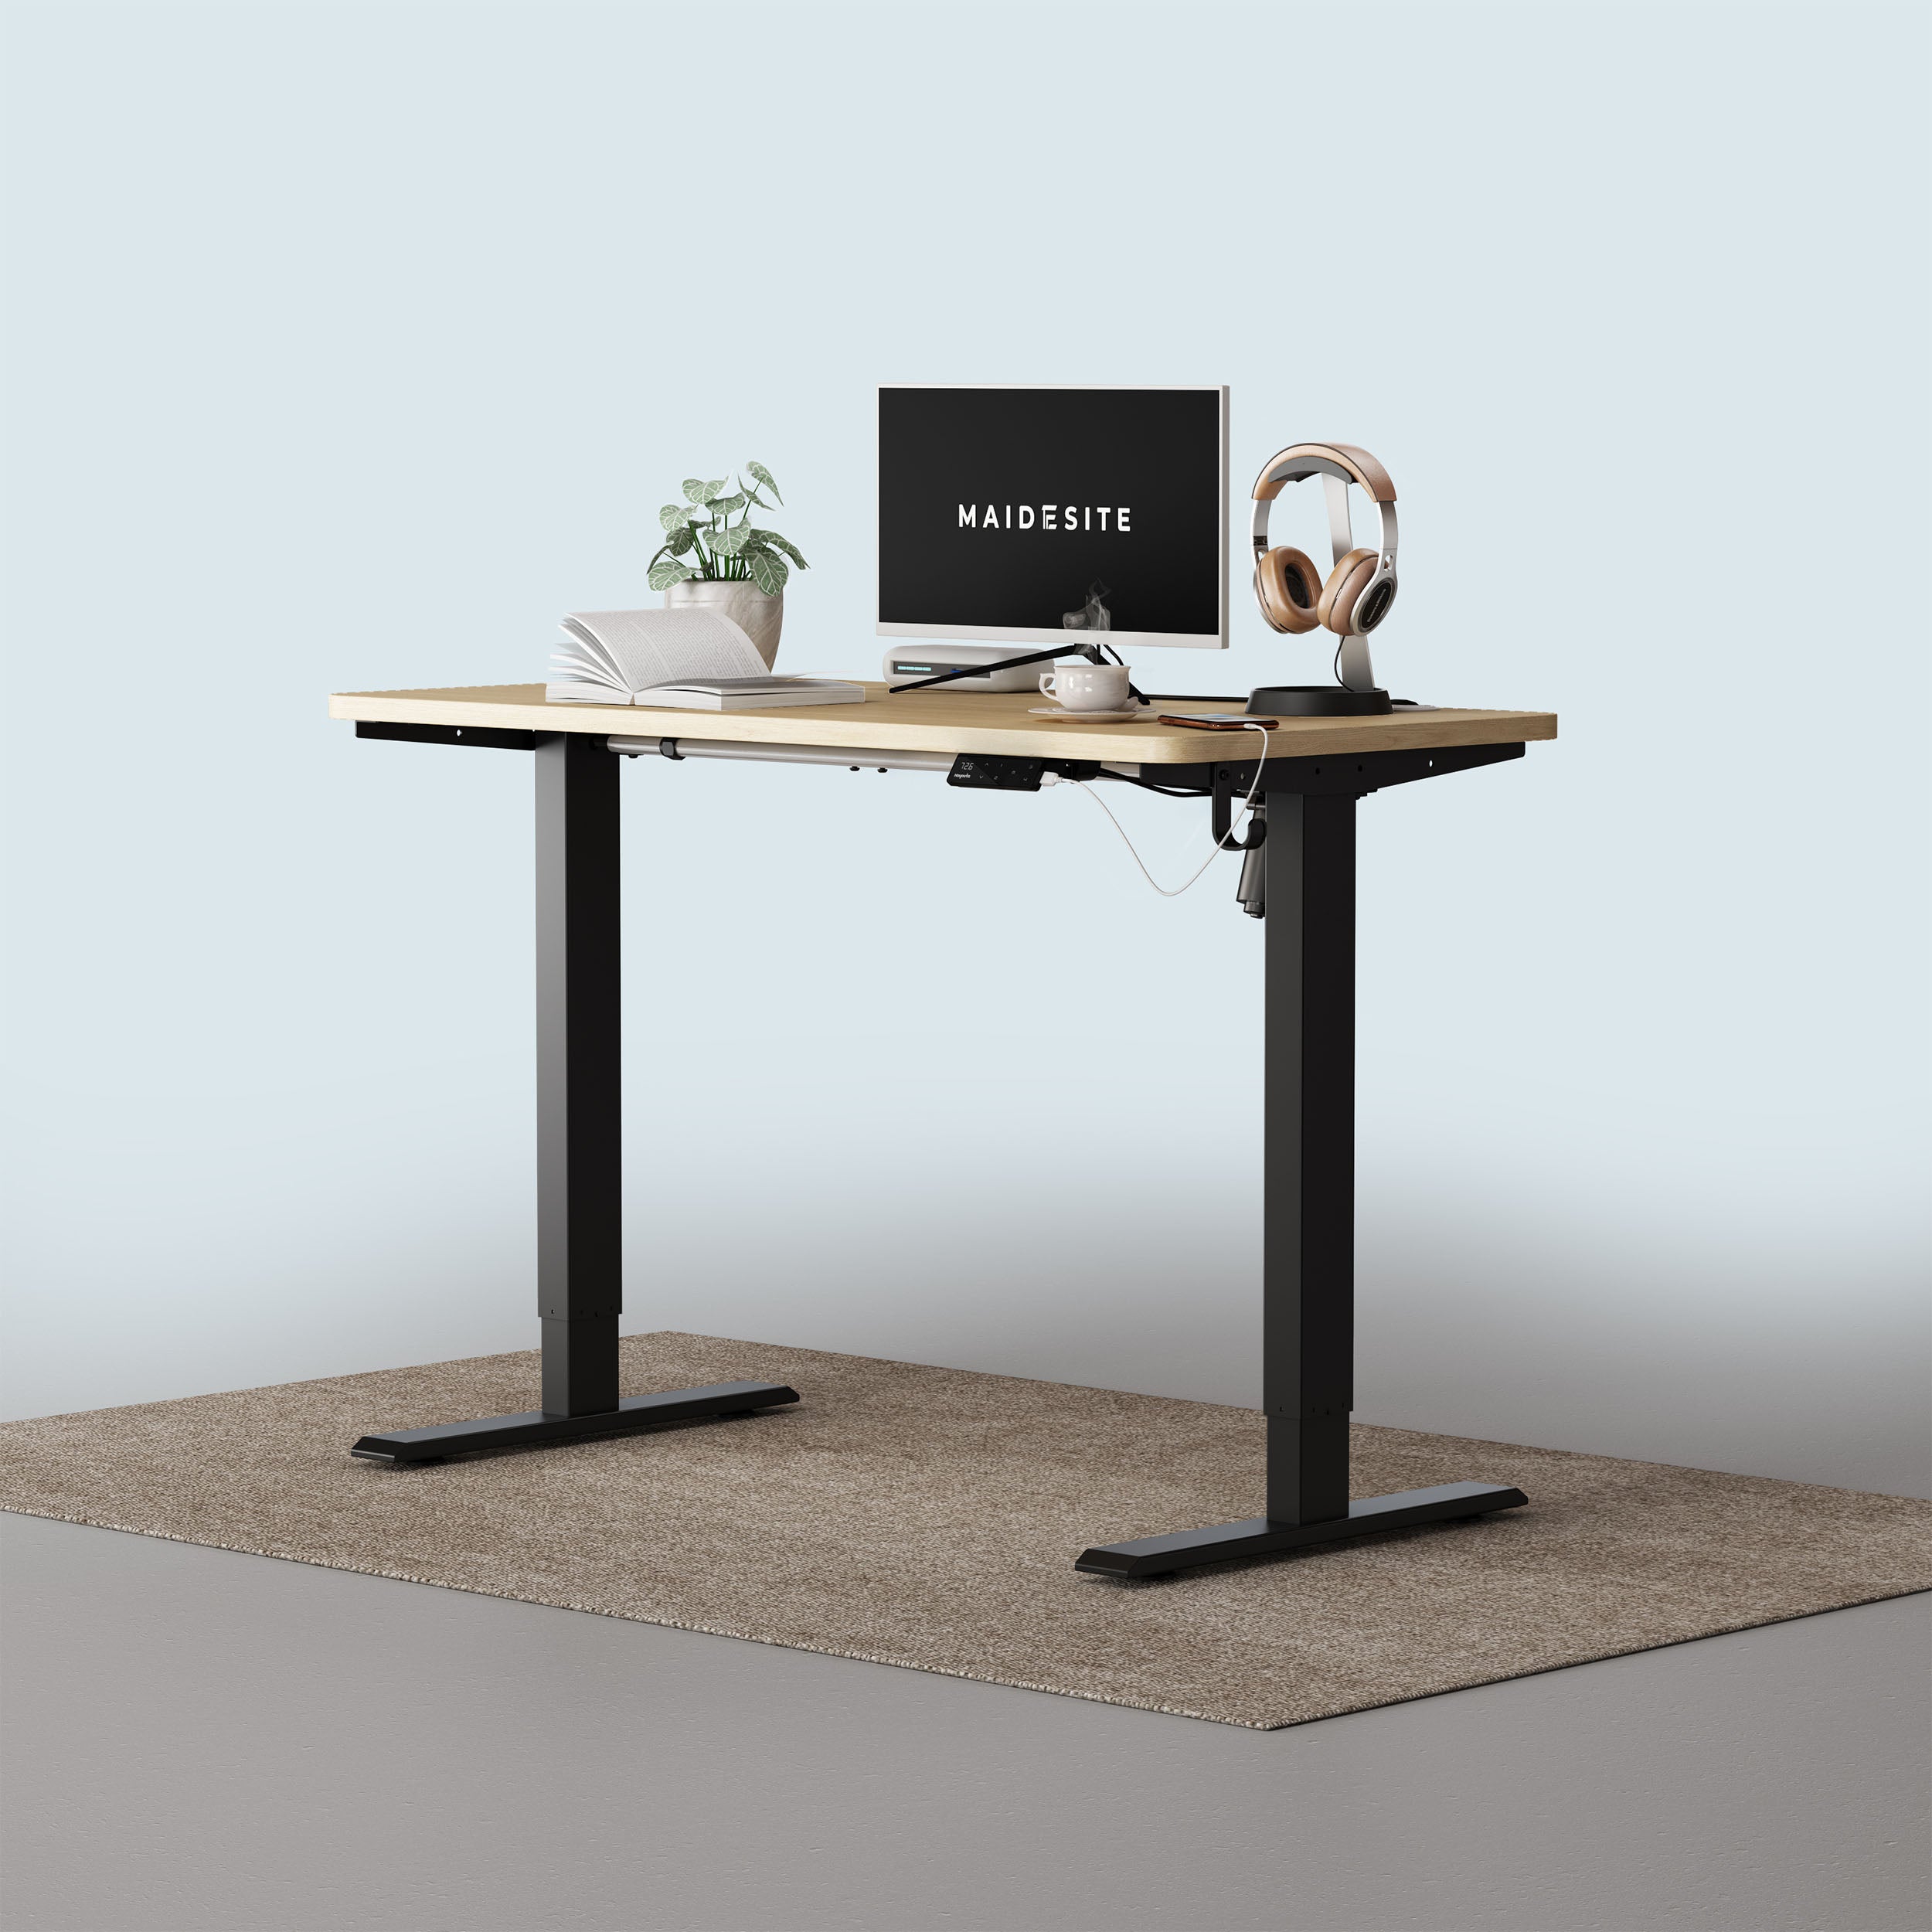 Maidesite T1 Baisc black height adjustable desk 140cm 